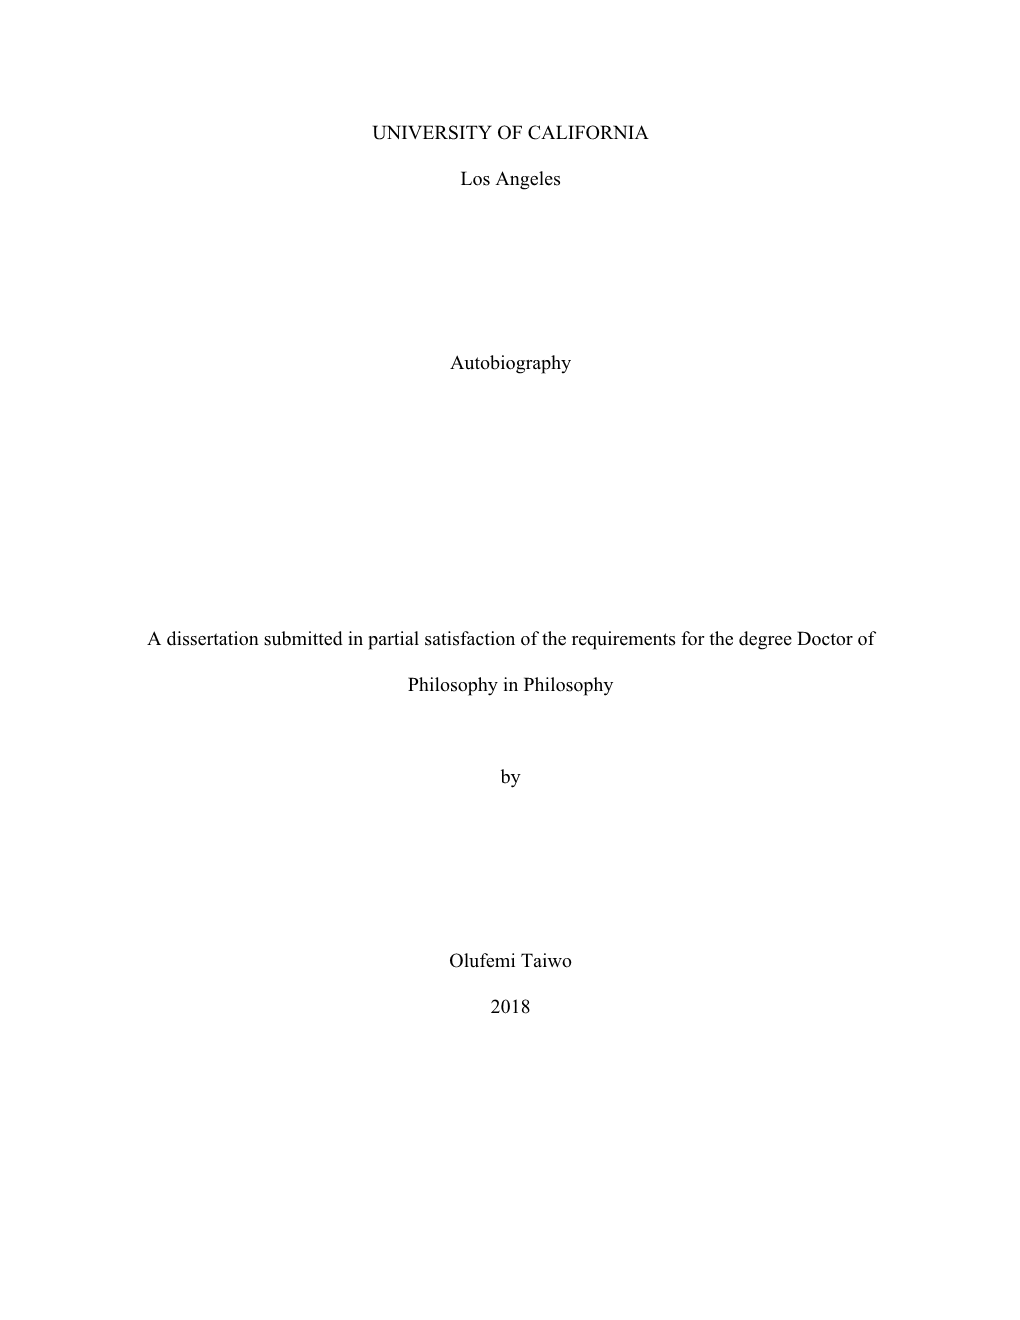 Dissertation Final Taiwo Revised